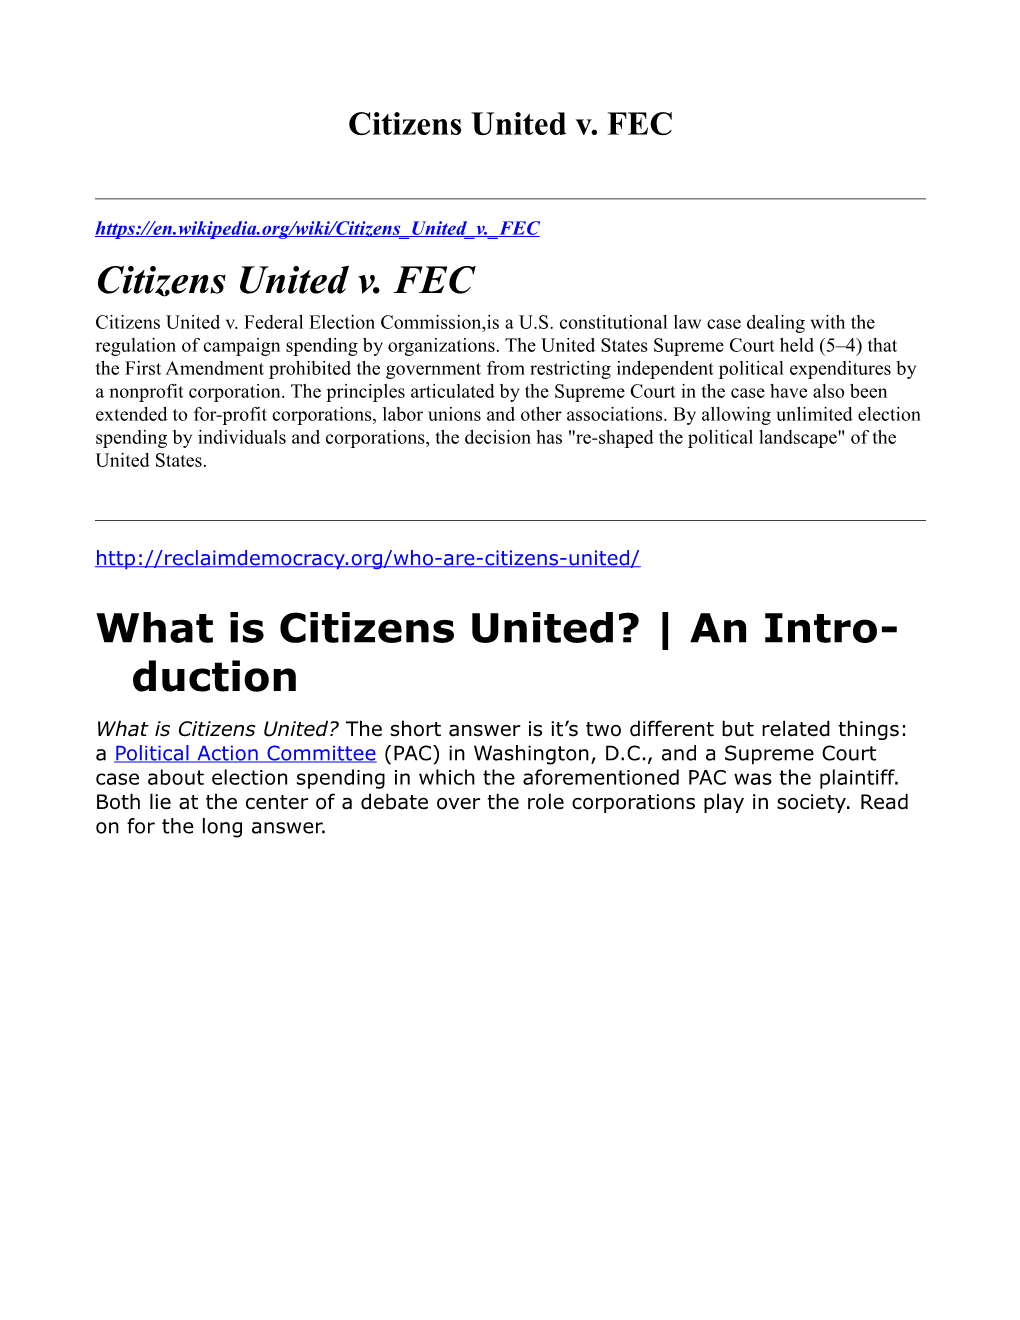 Citizens United V. FEC